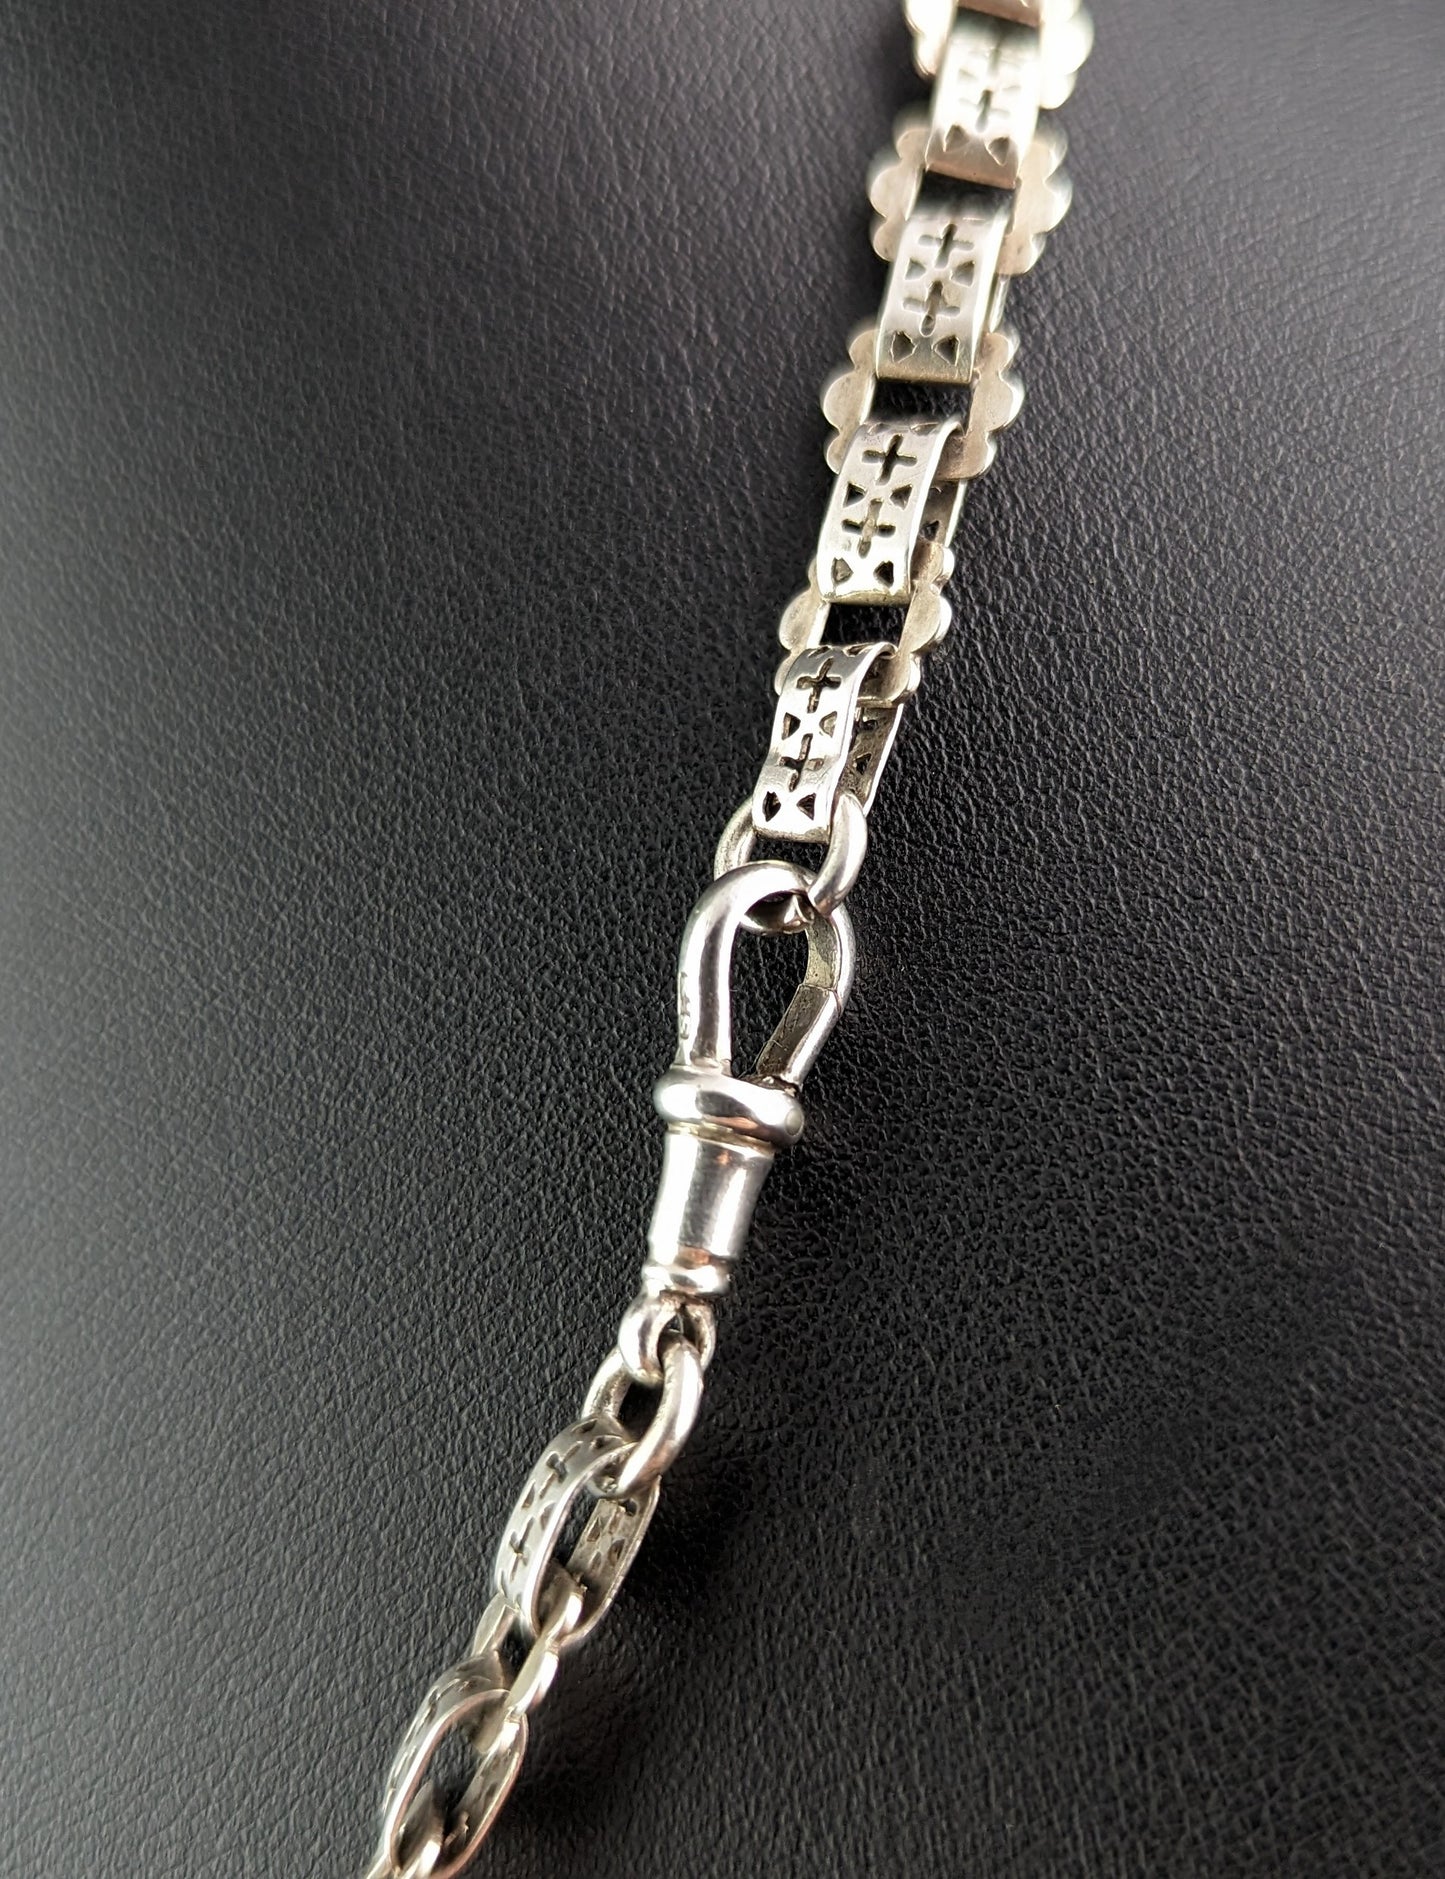 Antique Victorian silver book chain necklace, Victorian collar